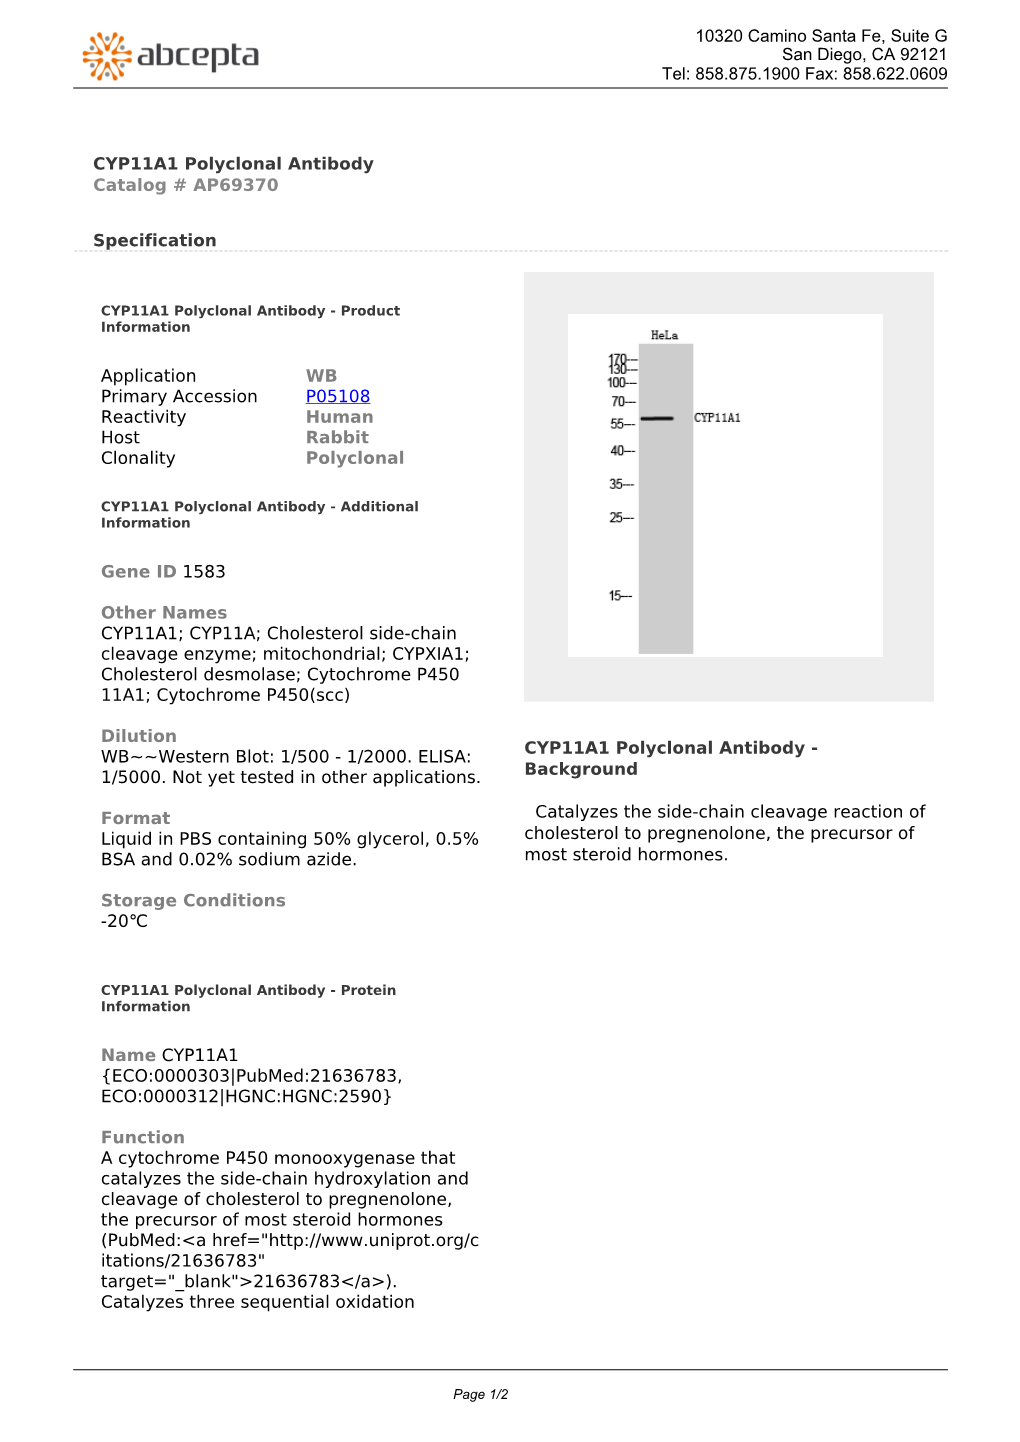 CYP11A1 Polyclonal Antibody Catalog # AP69370